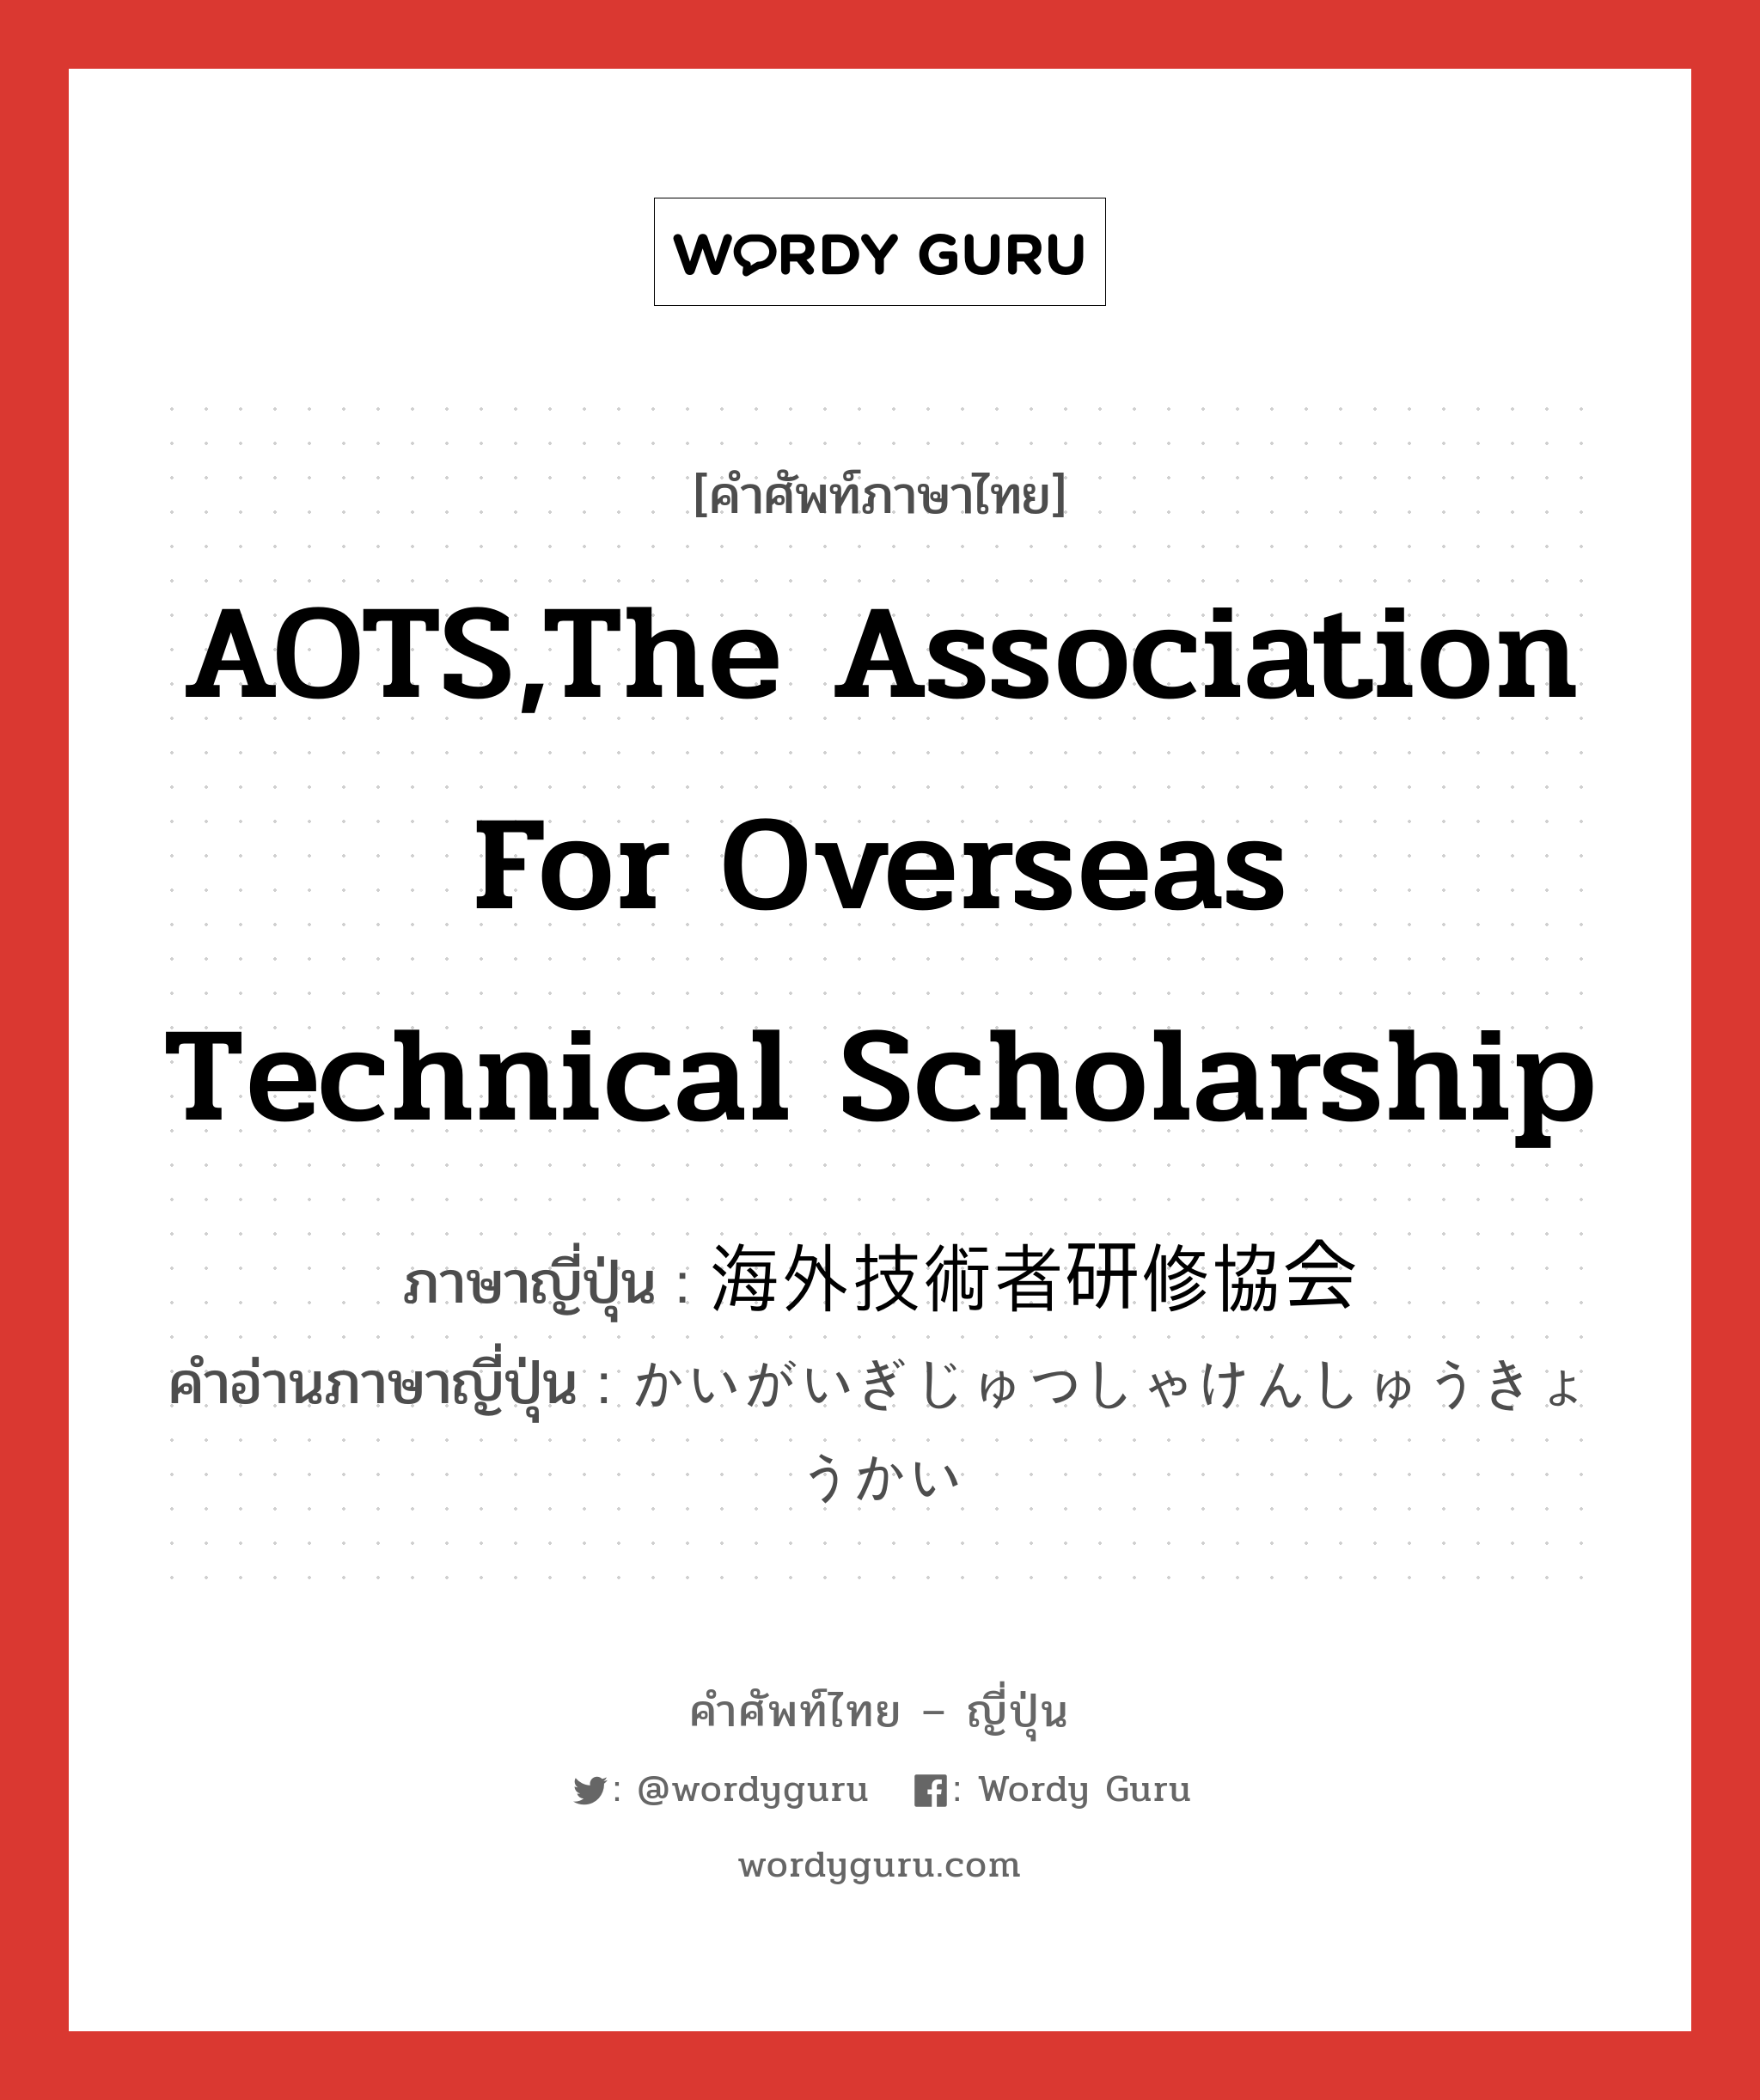 AOTS,The Association For Overseas Technical Scholarship ภาษาญี่ปุ่นคืออะไร, คำศัพท์ภาษาไทย - ญี่ปุ่น AOTS,The Association For Overseas Technical Scholarship ภาษาญี่ปุ่น 海外技術者研修協会 คำอ่านภาษาญี่ปุ่น かいがいぎじゅつしゃけんしゅうきょうかい หมวด n หมวด n